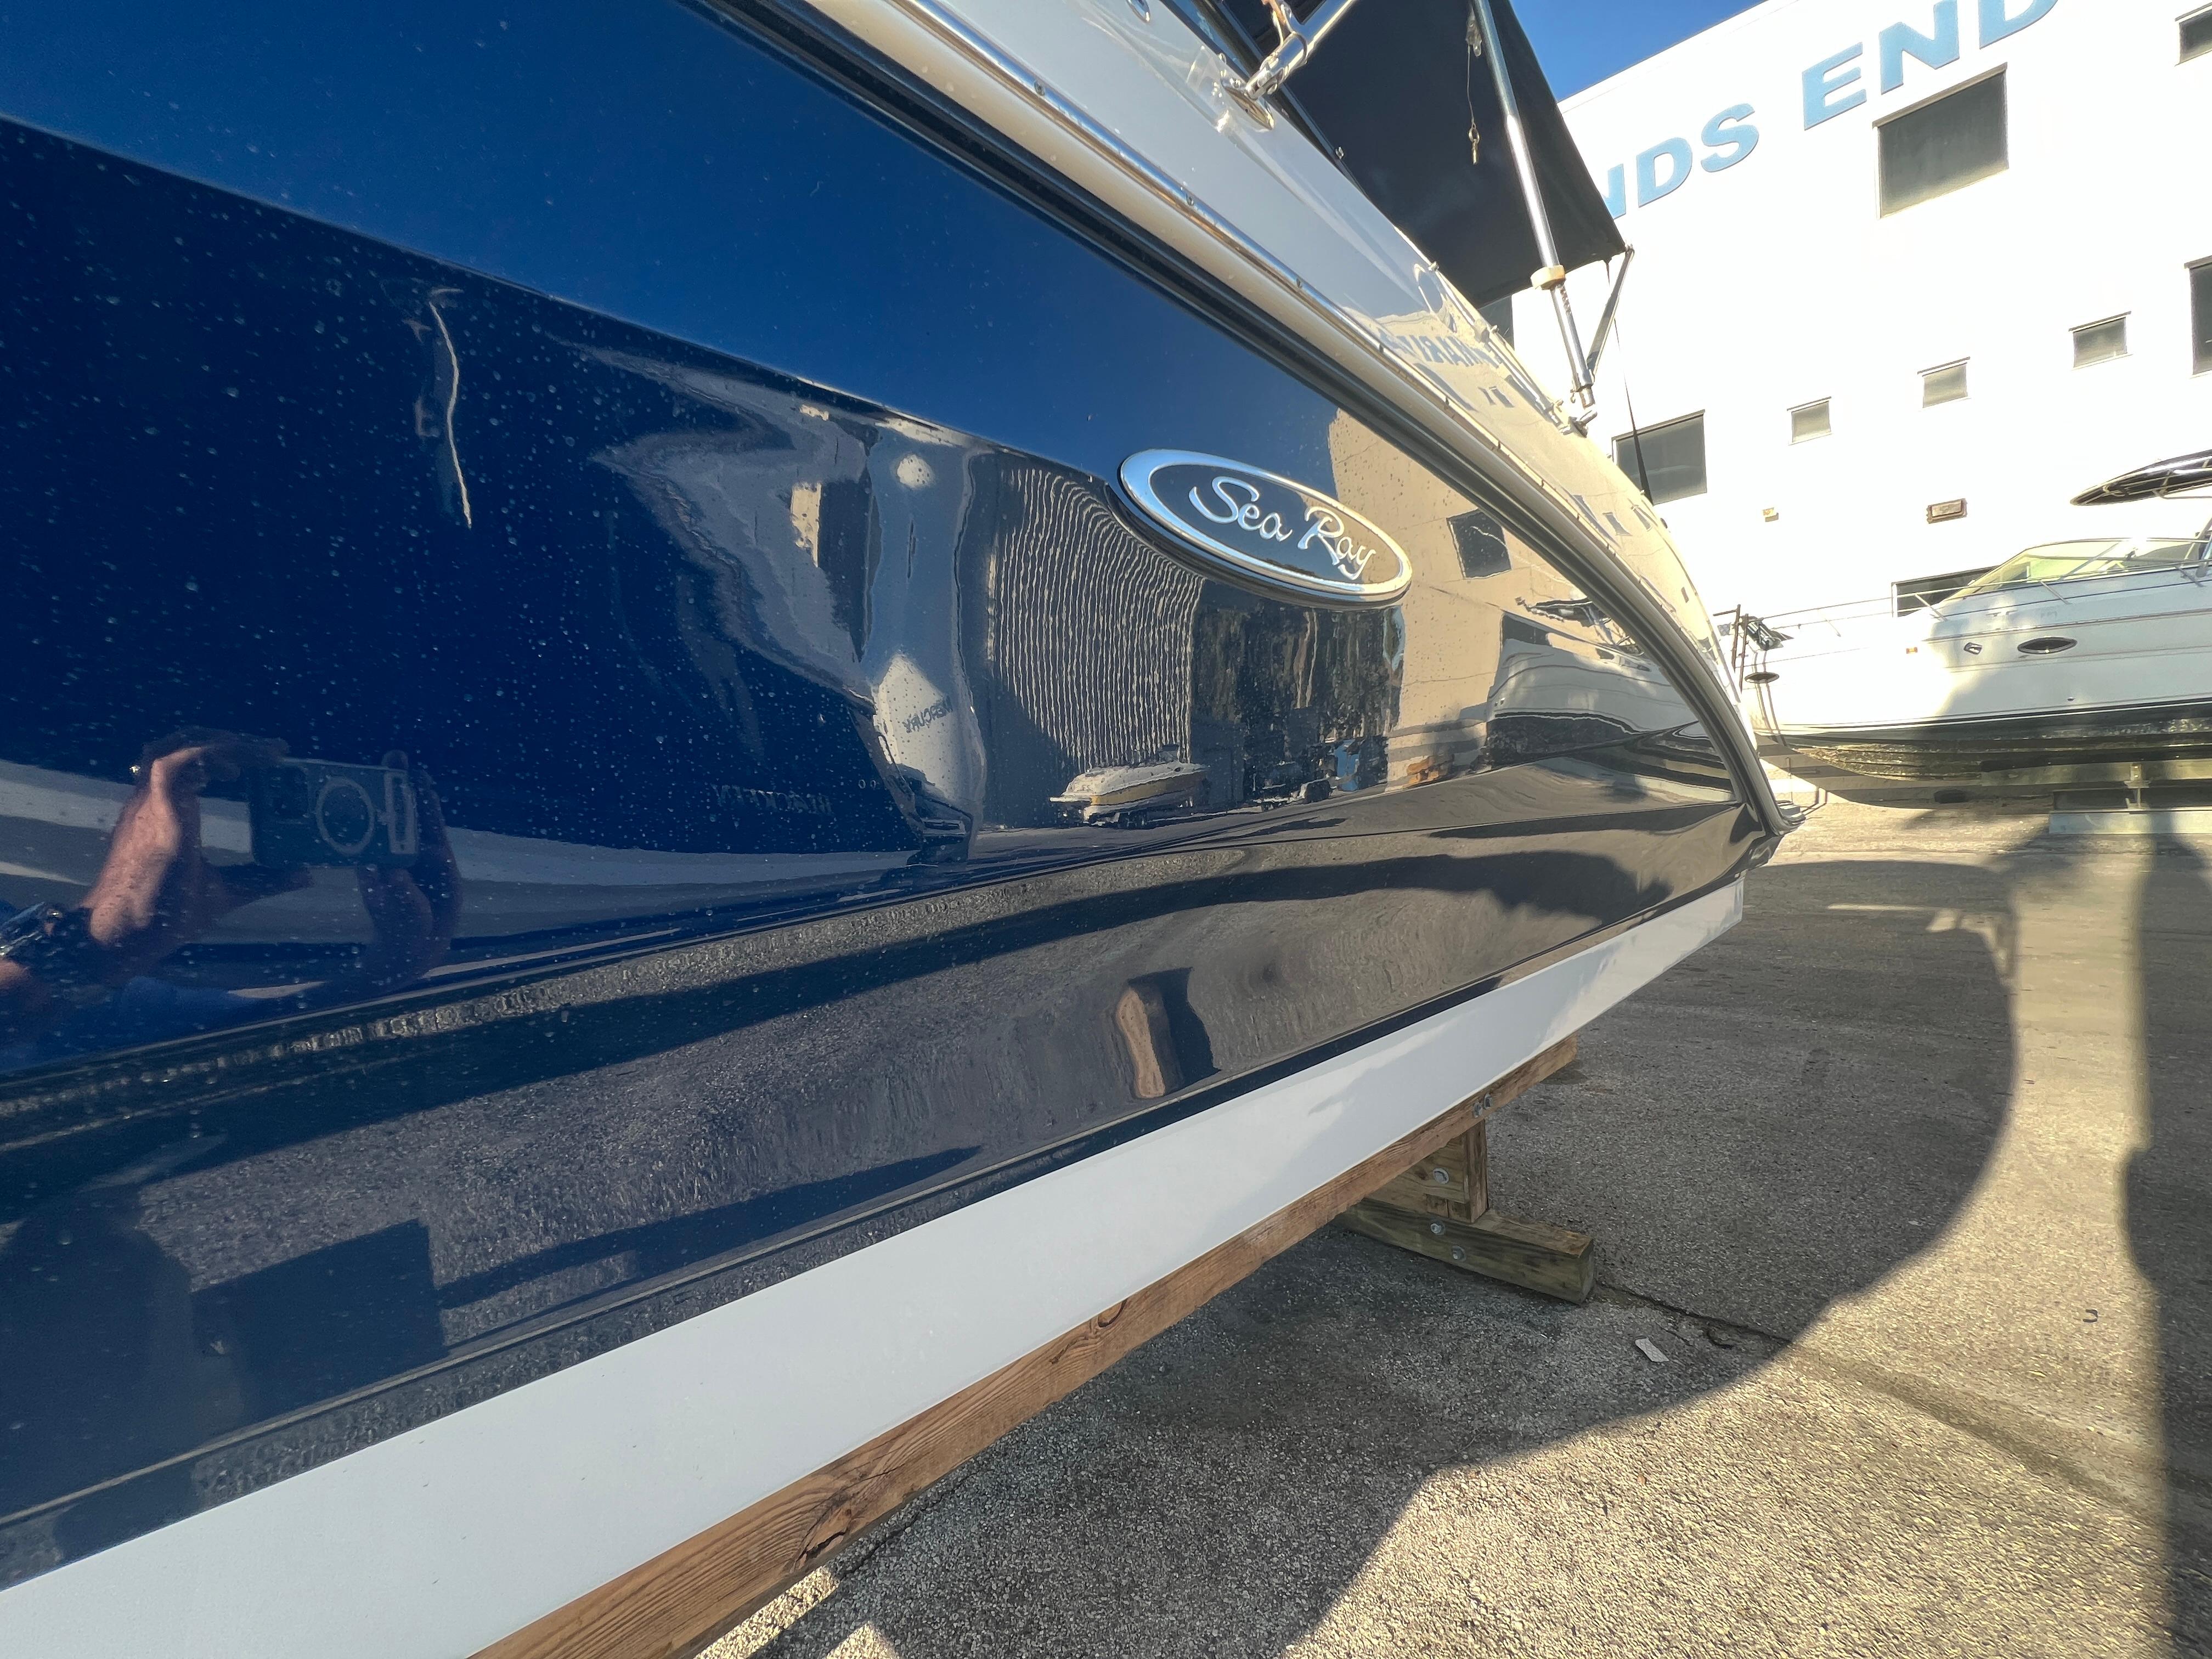 2020 Sea Ray SDX 250 Outboard